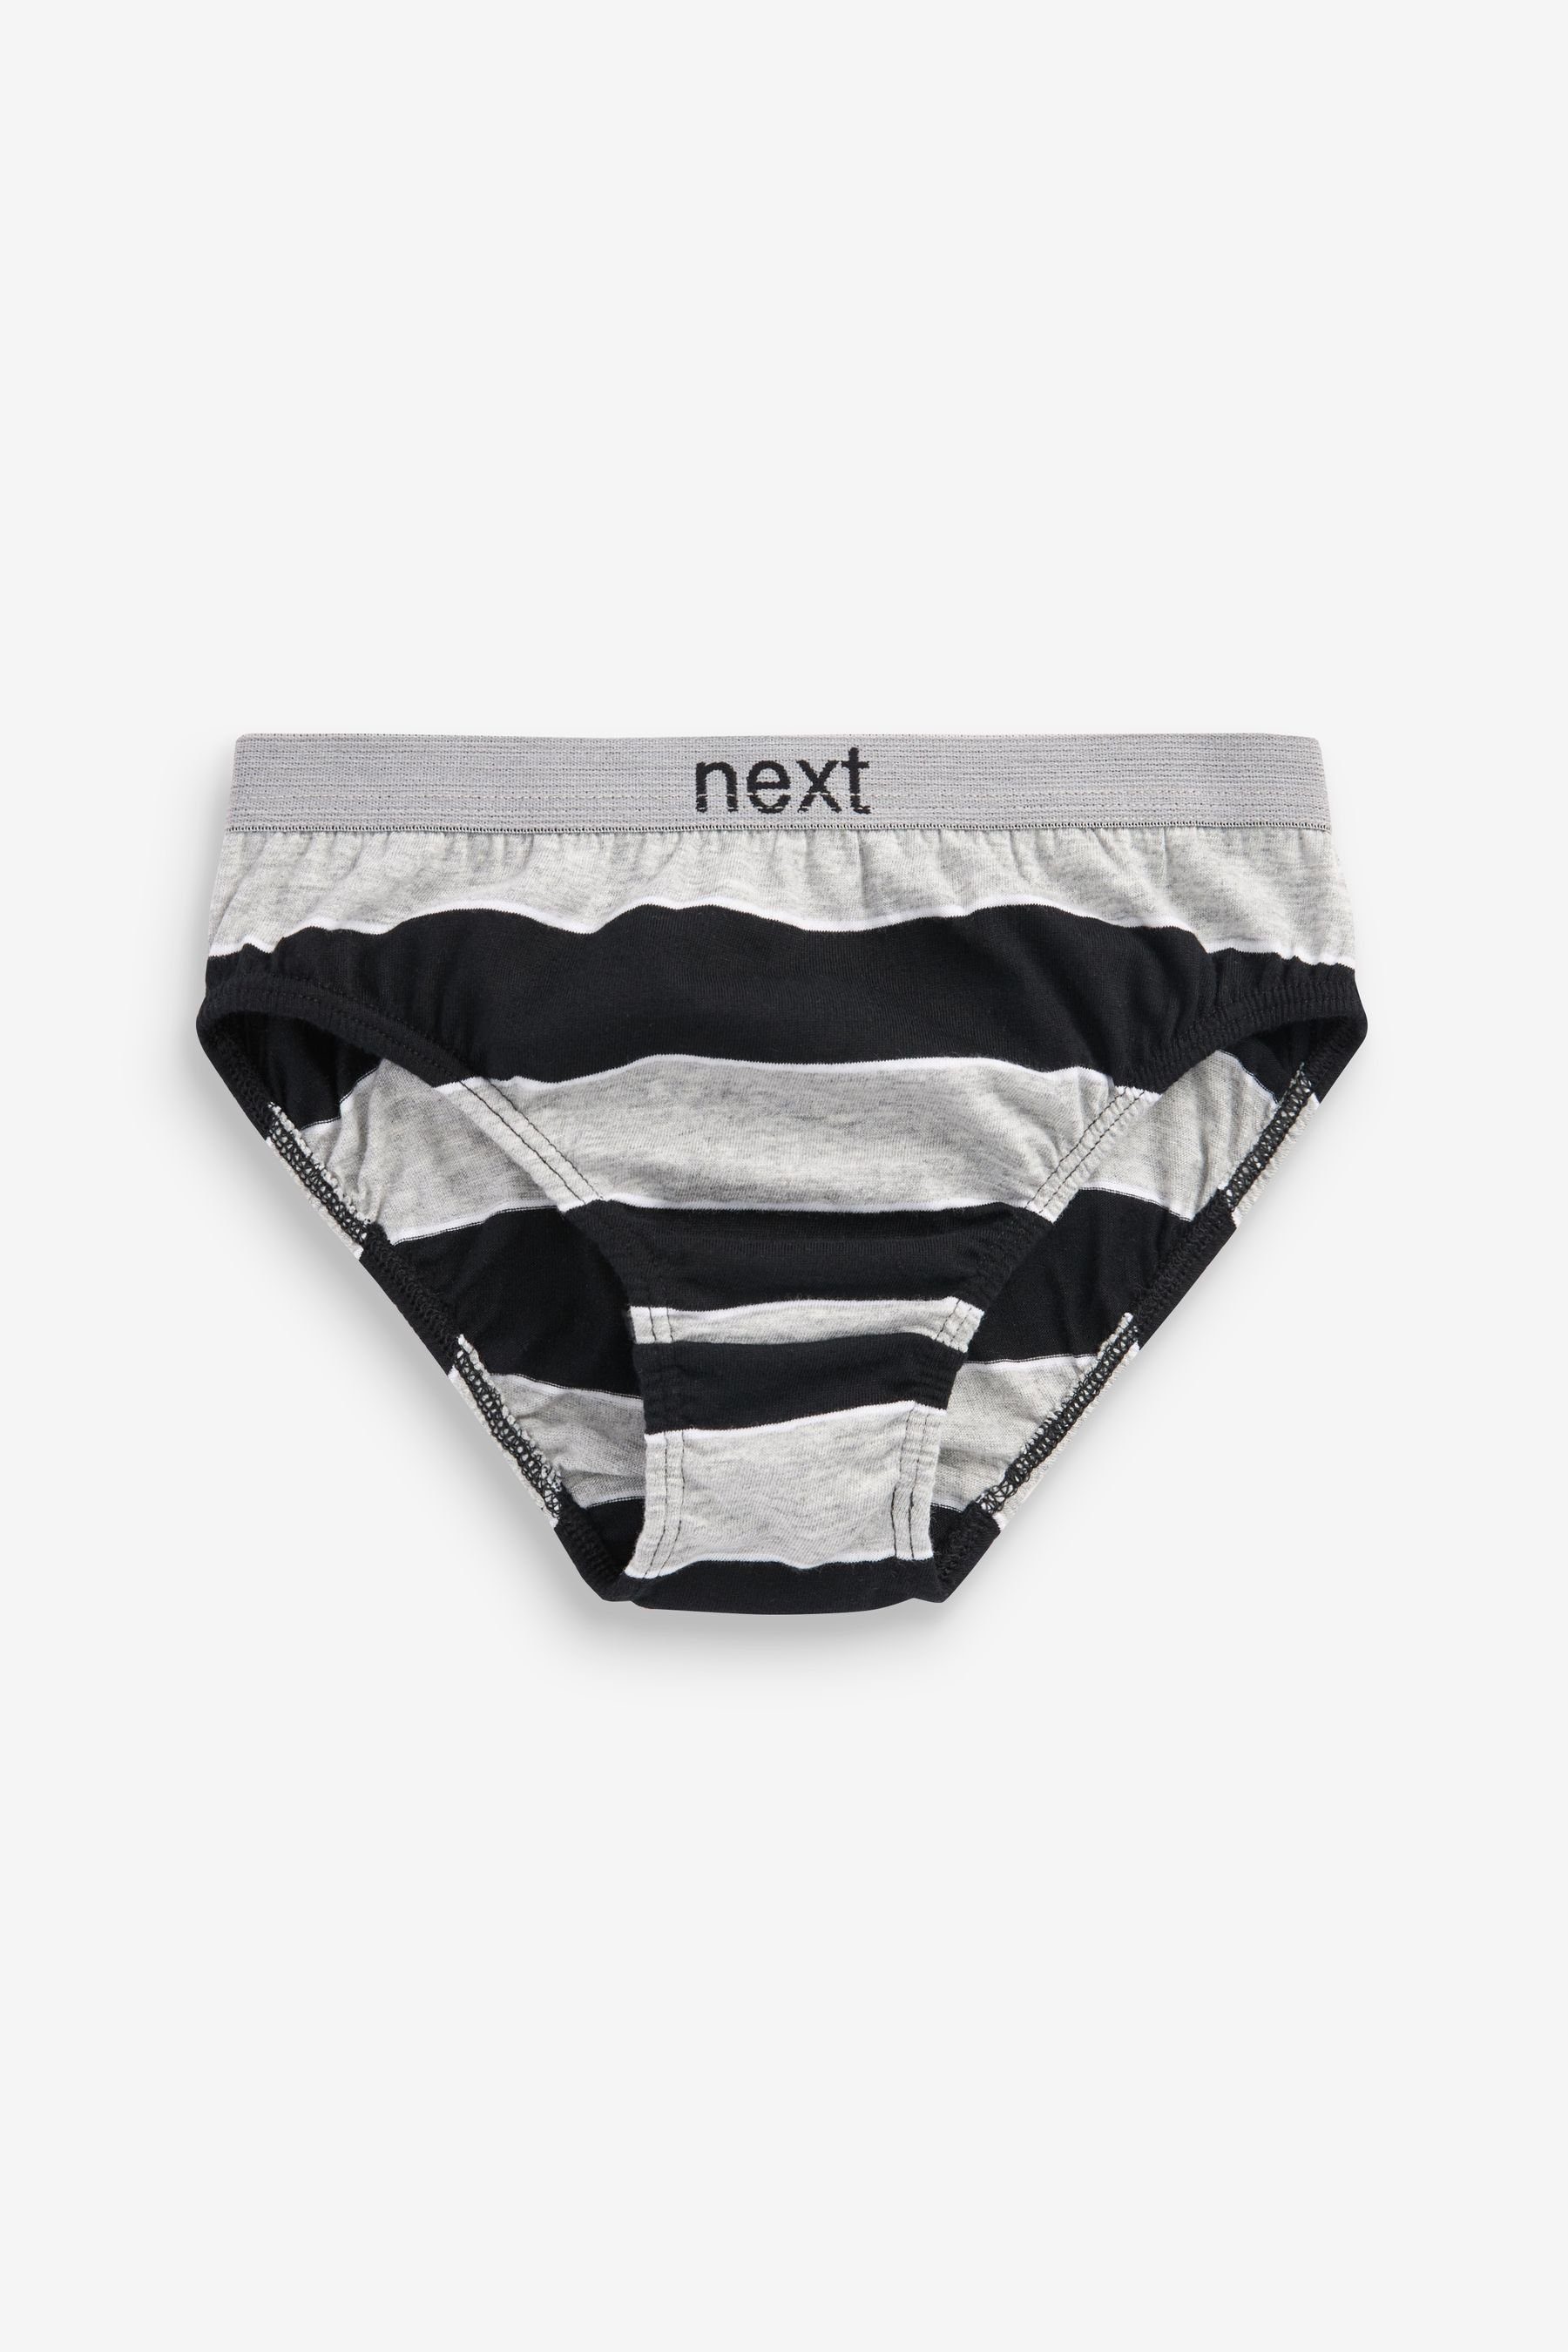 Next 5er-Pack (5-St) Stripe Black/White/Grey im Slip Unterhosen